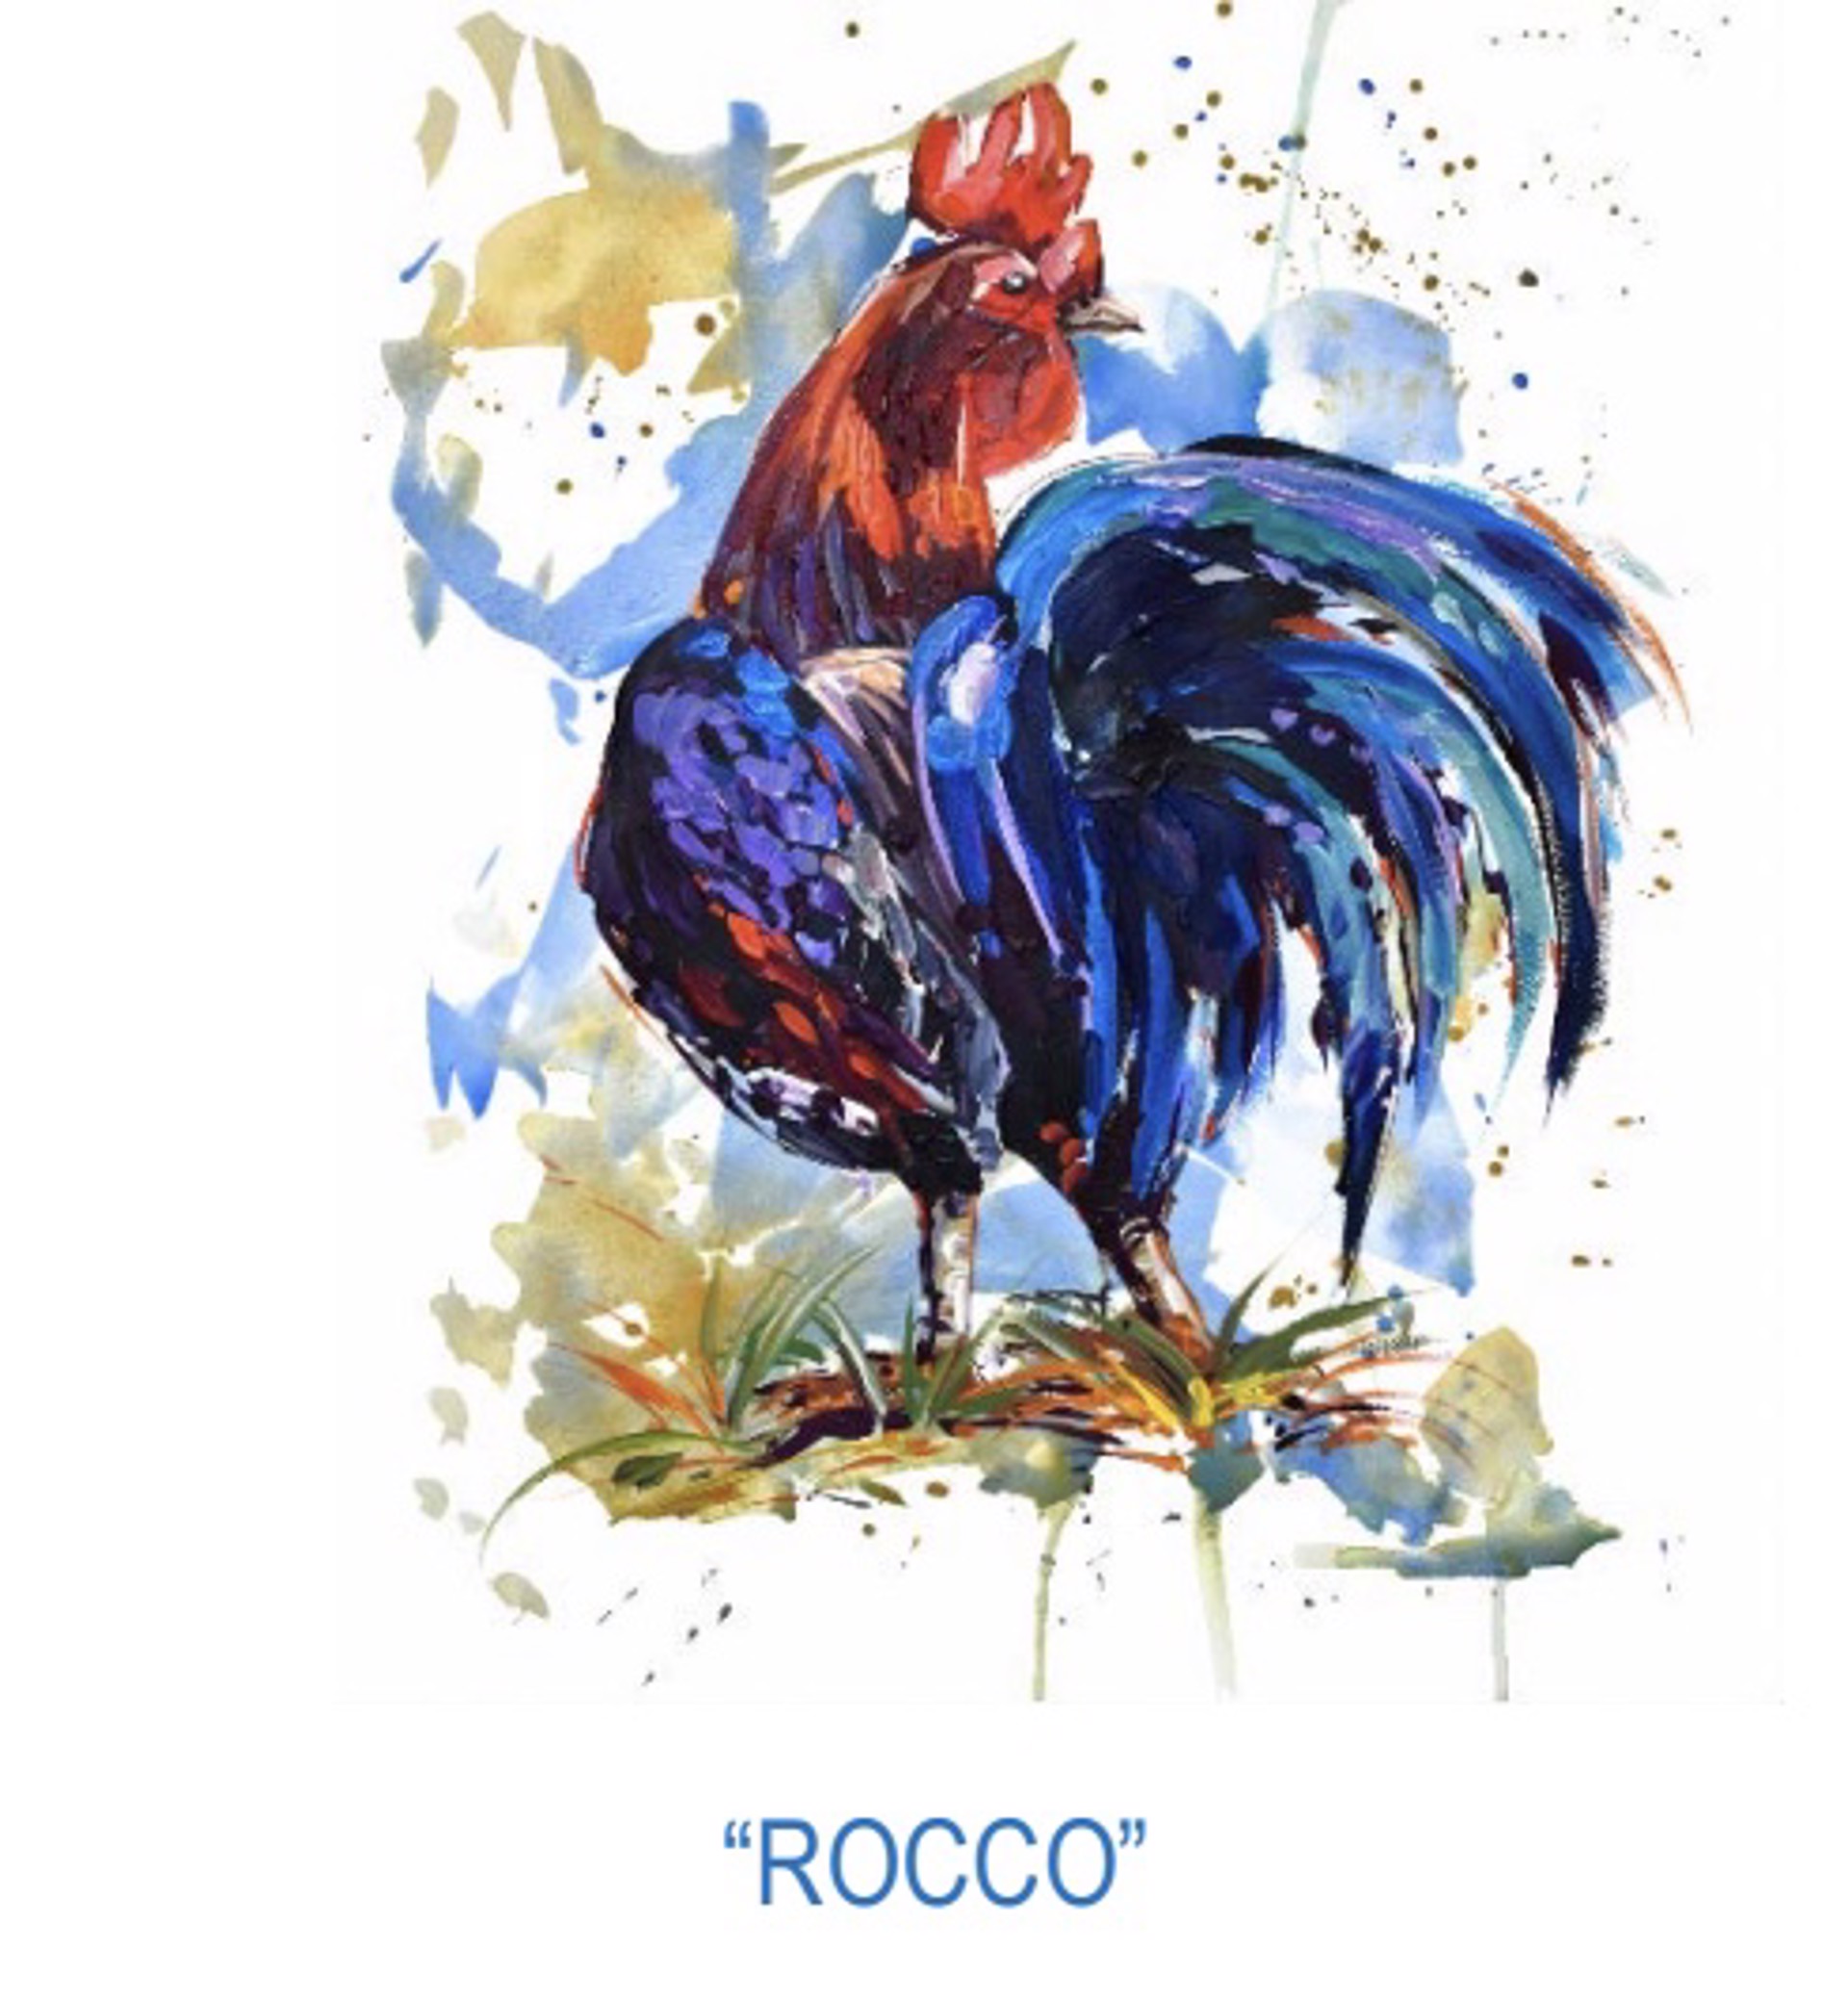 Rocco by Steve Barton